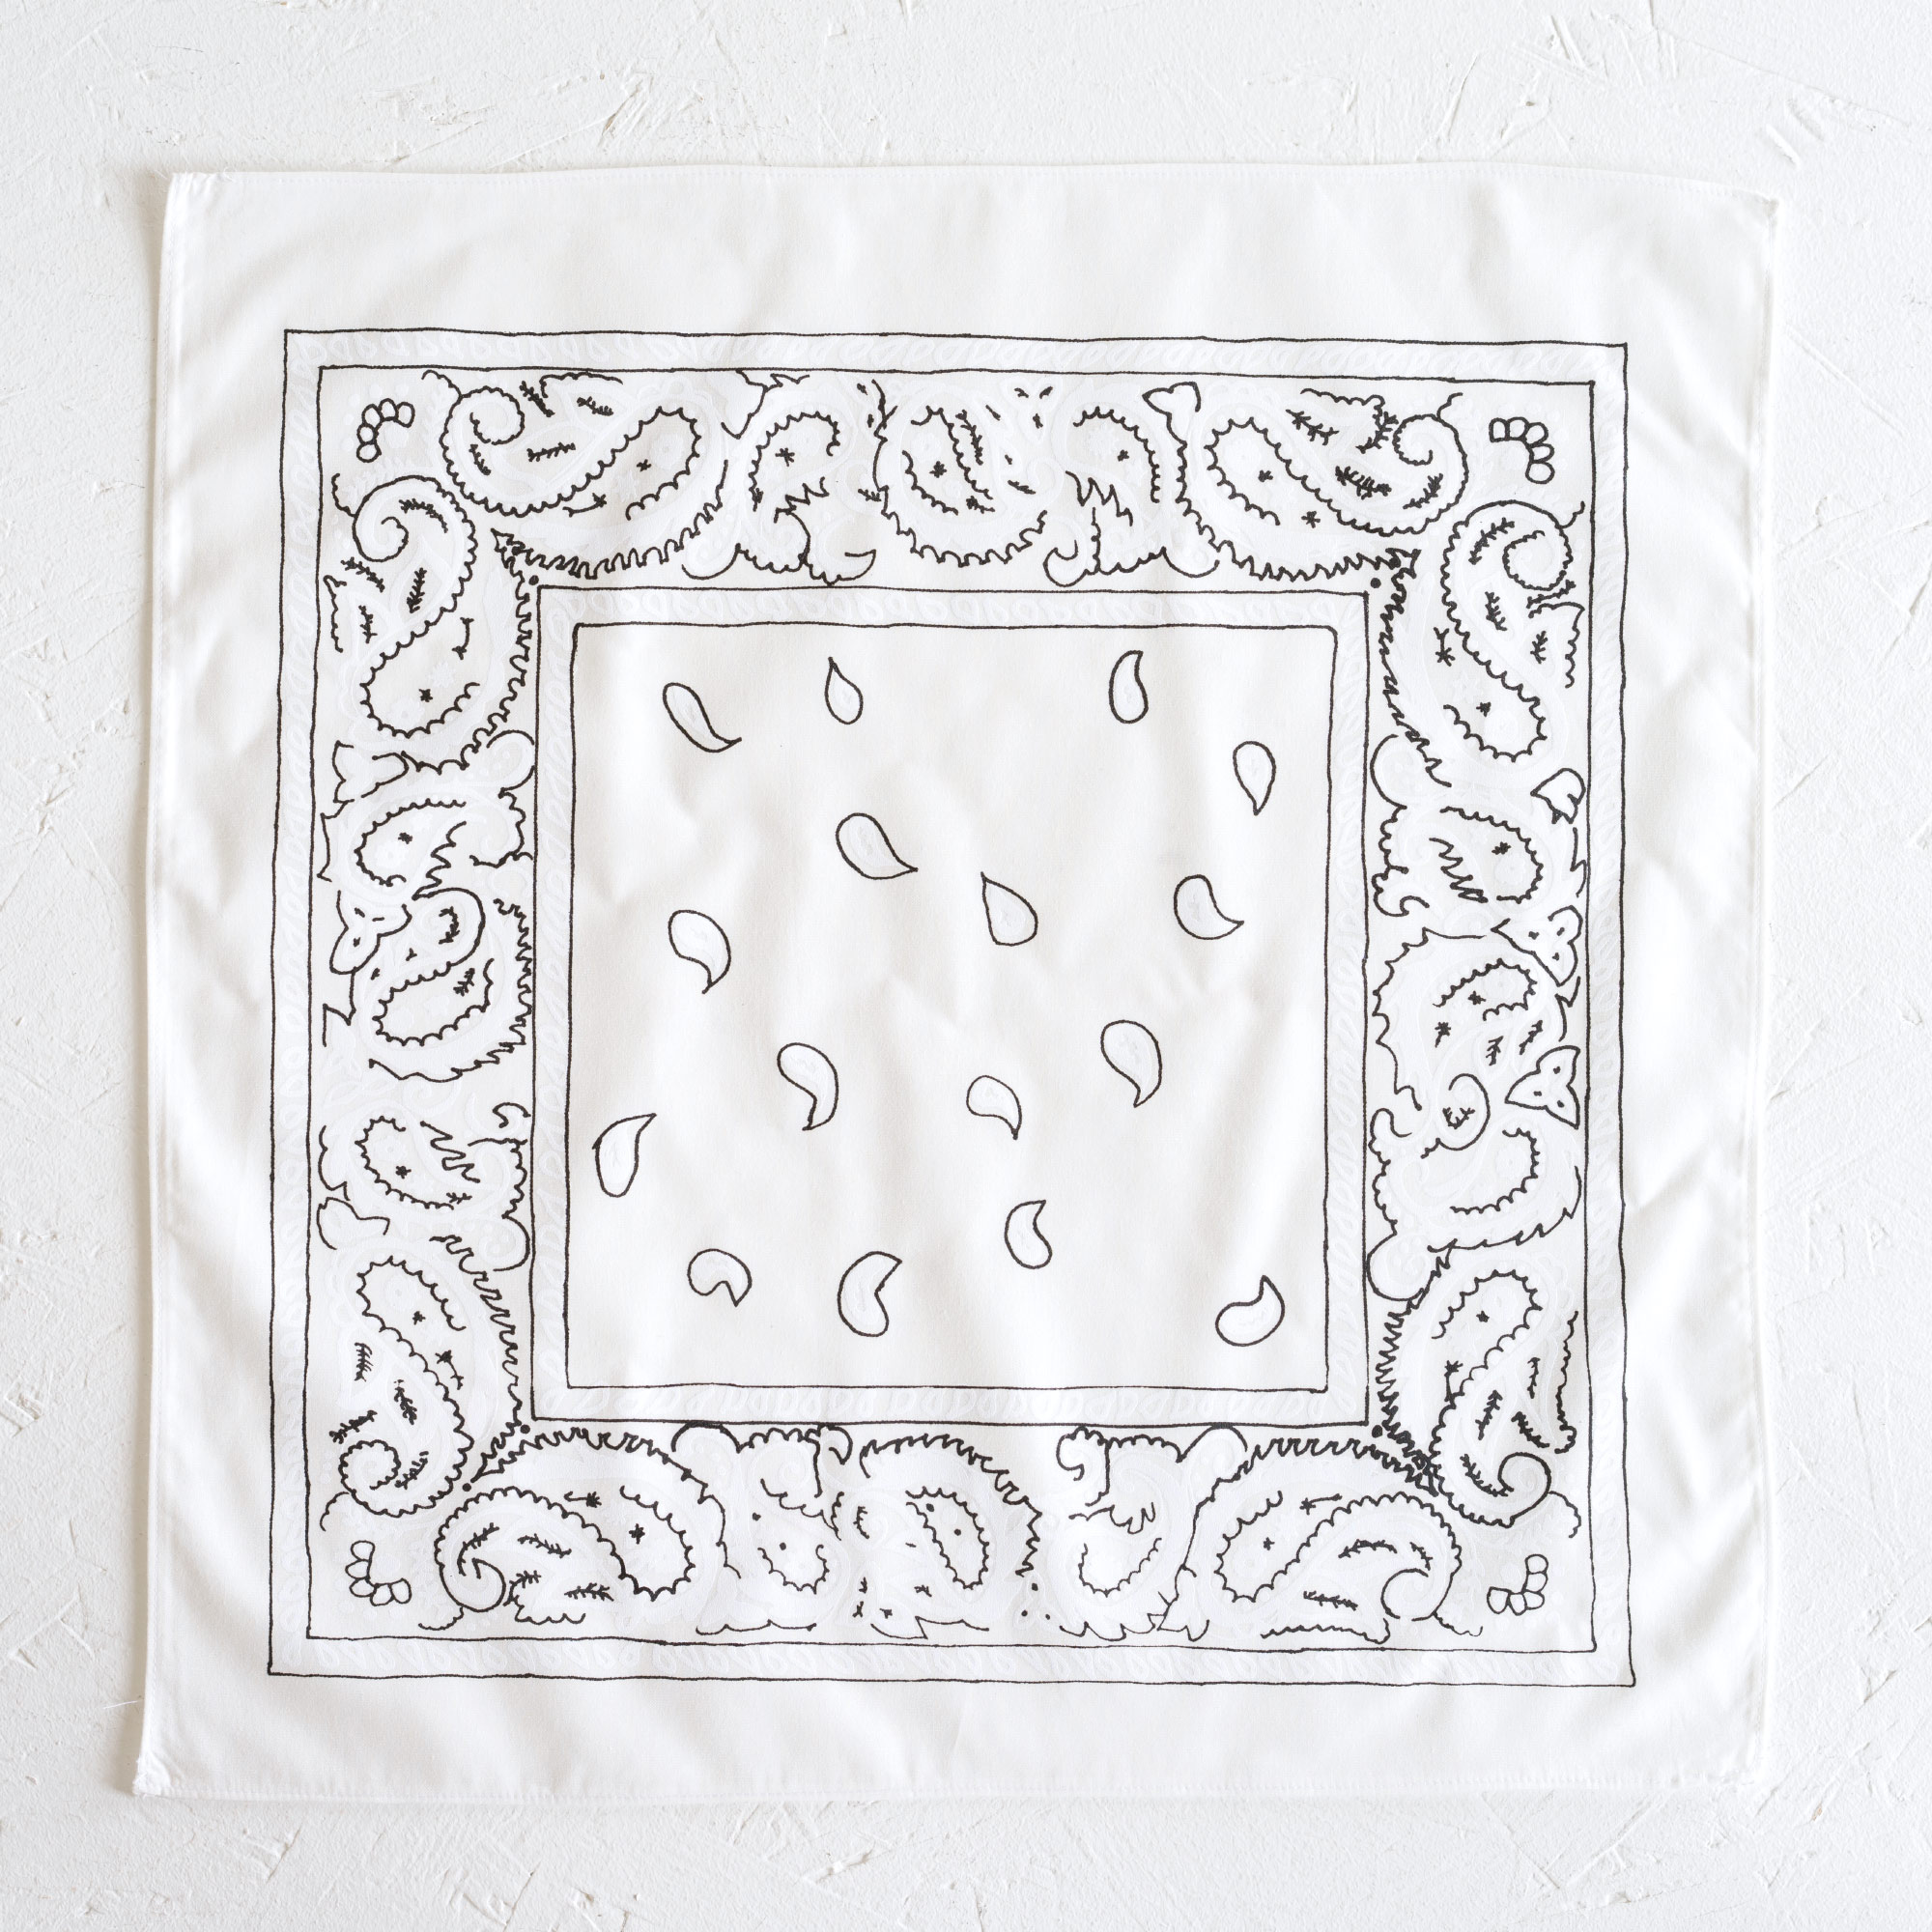 Nancy Davidson, *Hanky Code* (White), 2016, Two color silkscreen on hand cut & sewn cotton, 17 x 17 inches (43.18 x 43.18 cm)